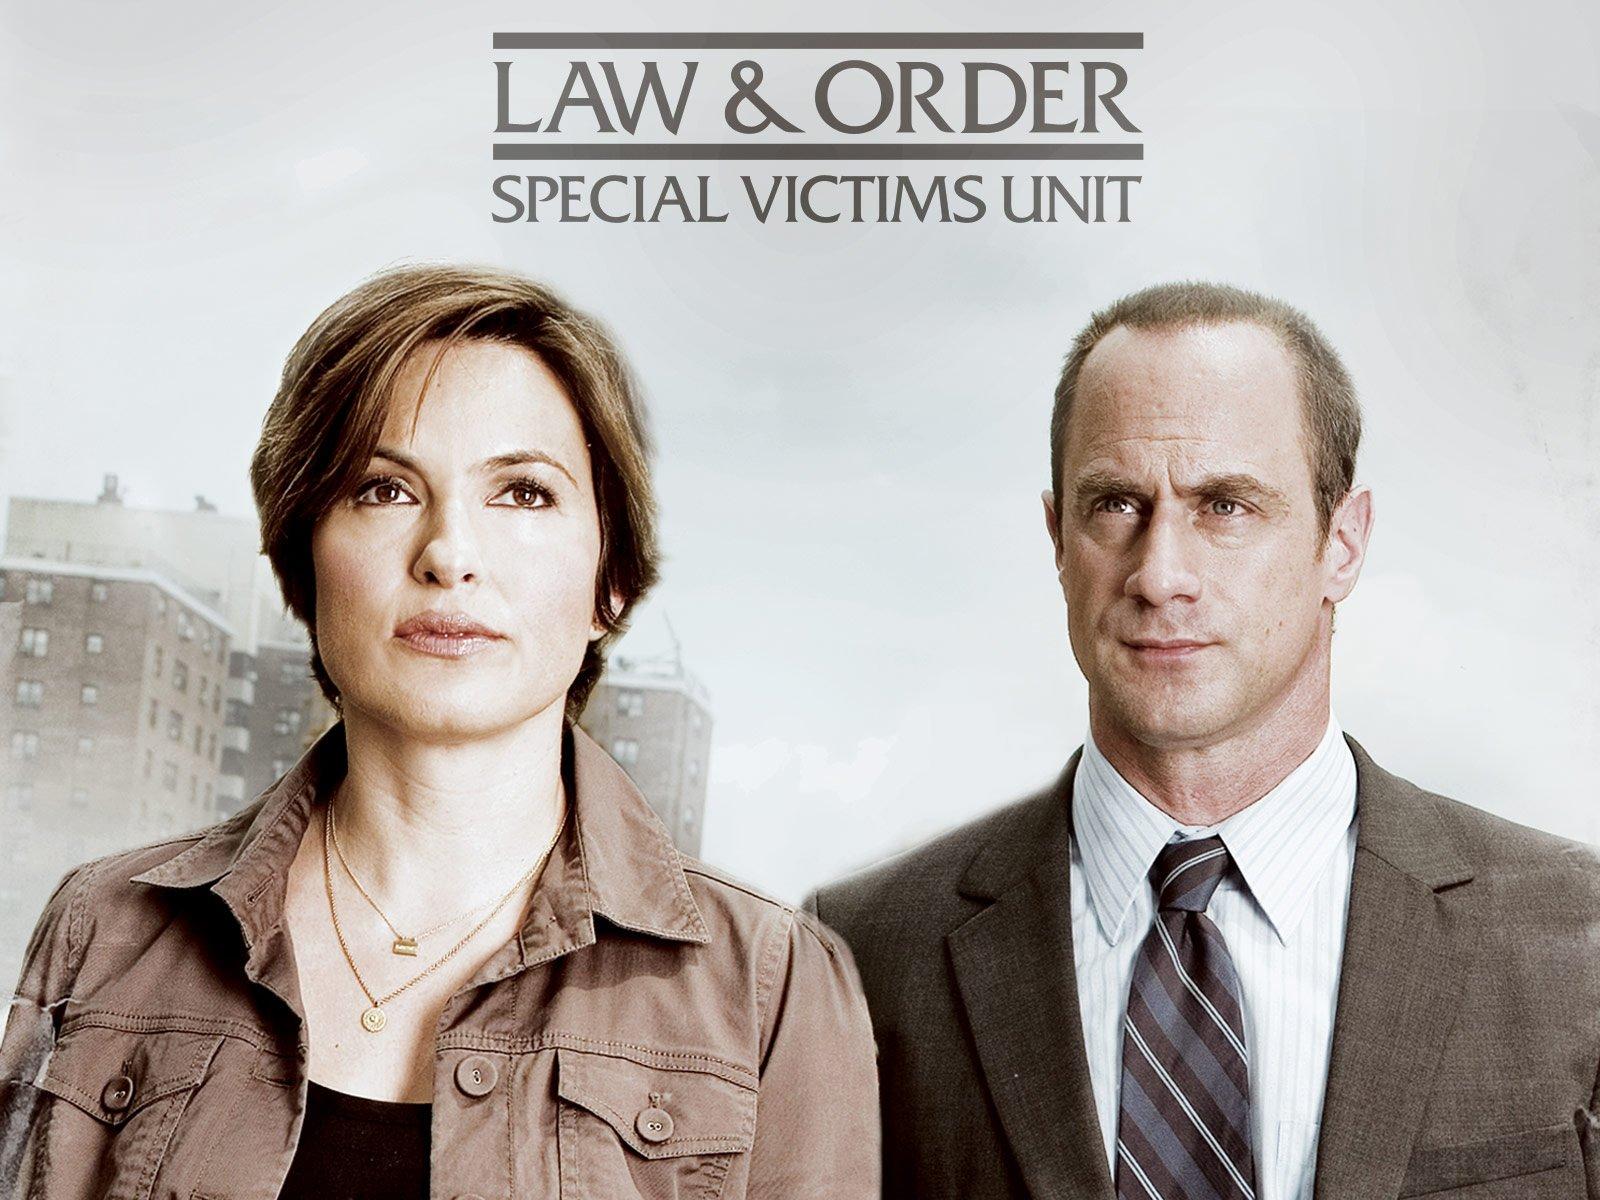 Law & Order: Special Victims Unit Season 9. Prime